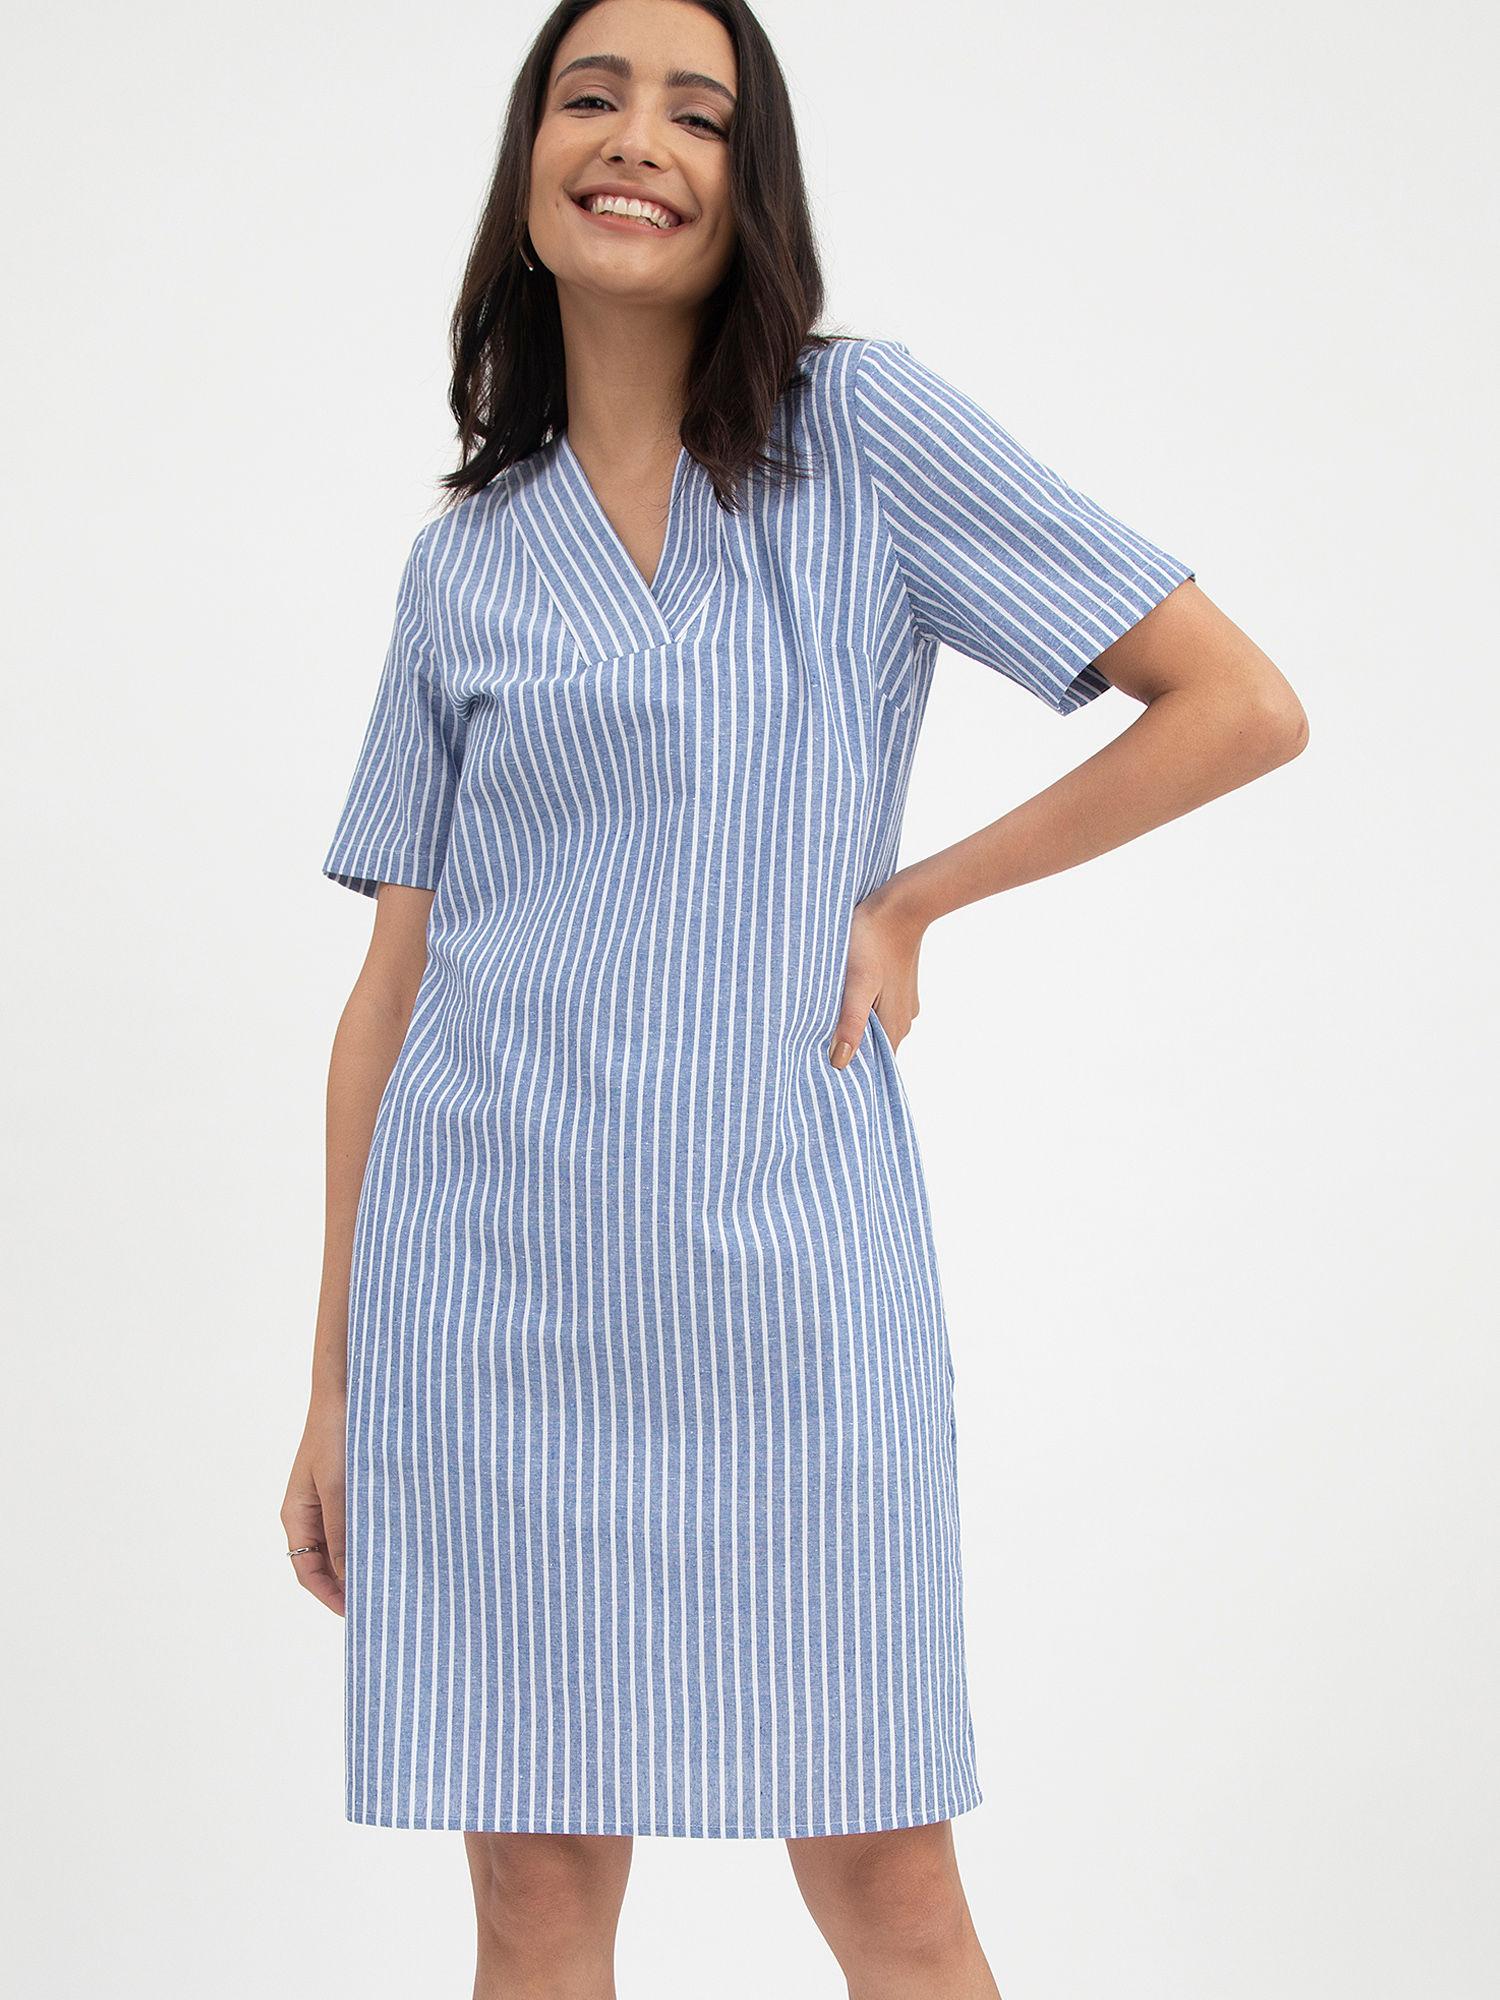 linen striped v neck shift dress - blue and white